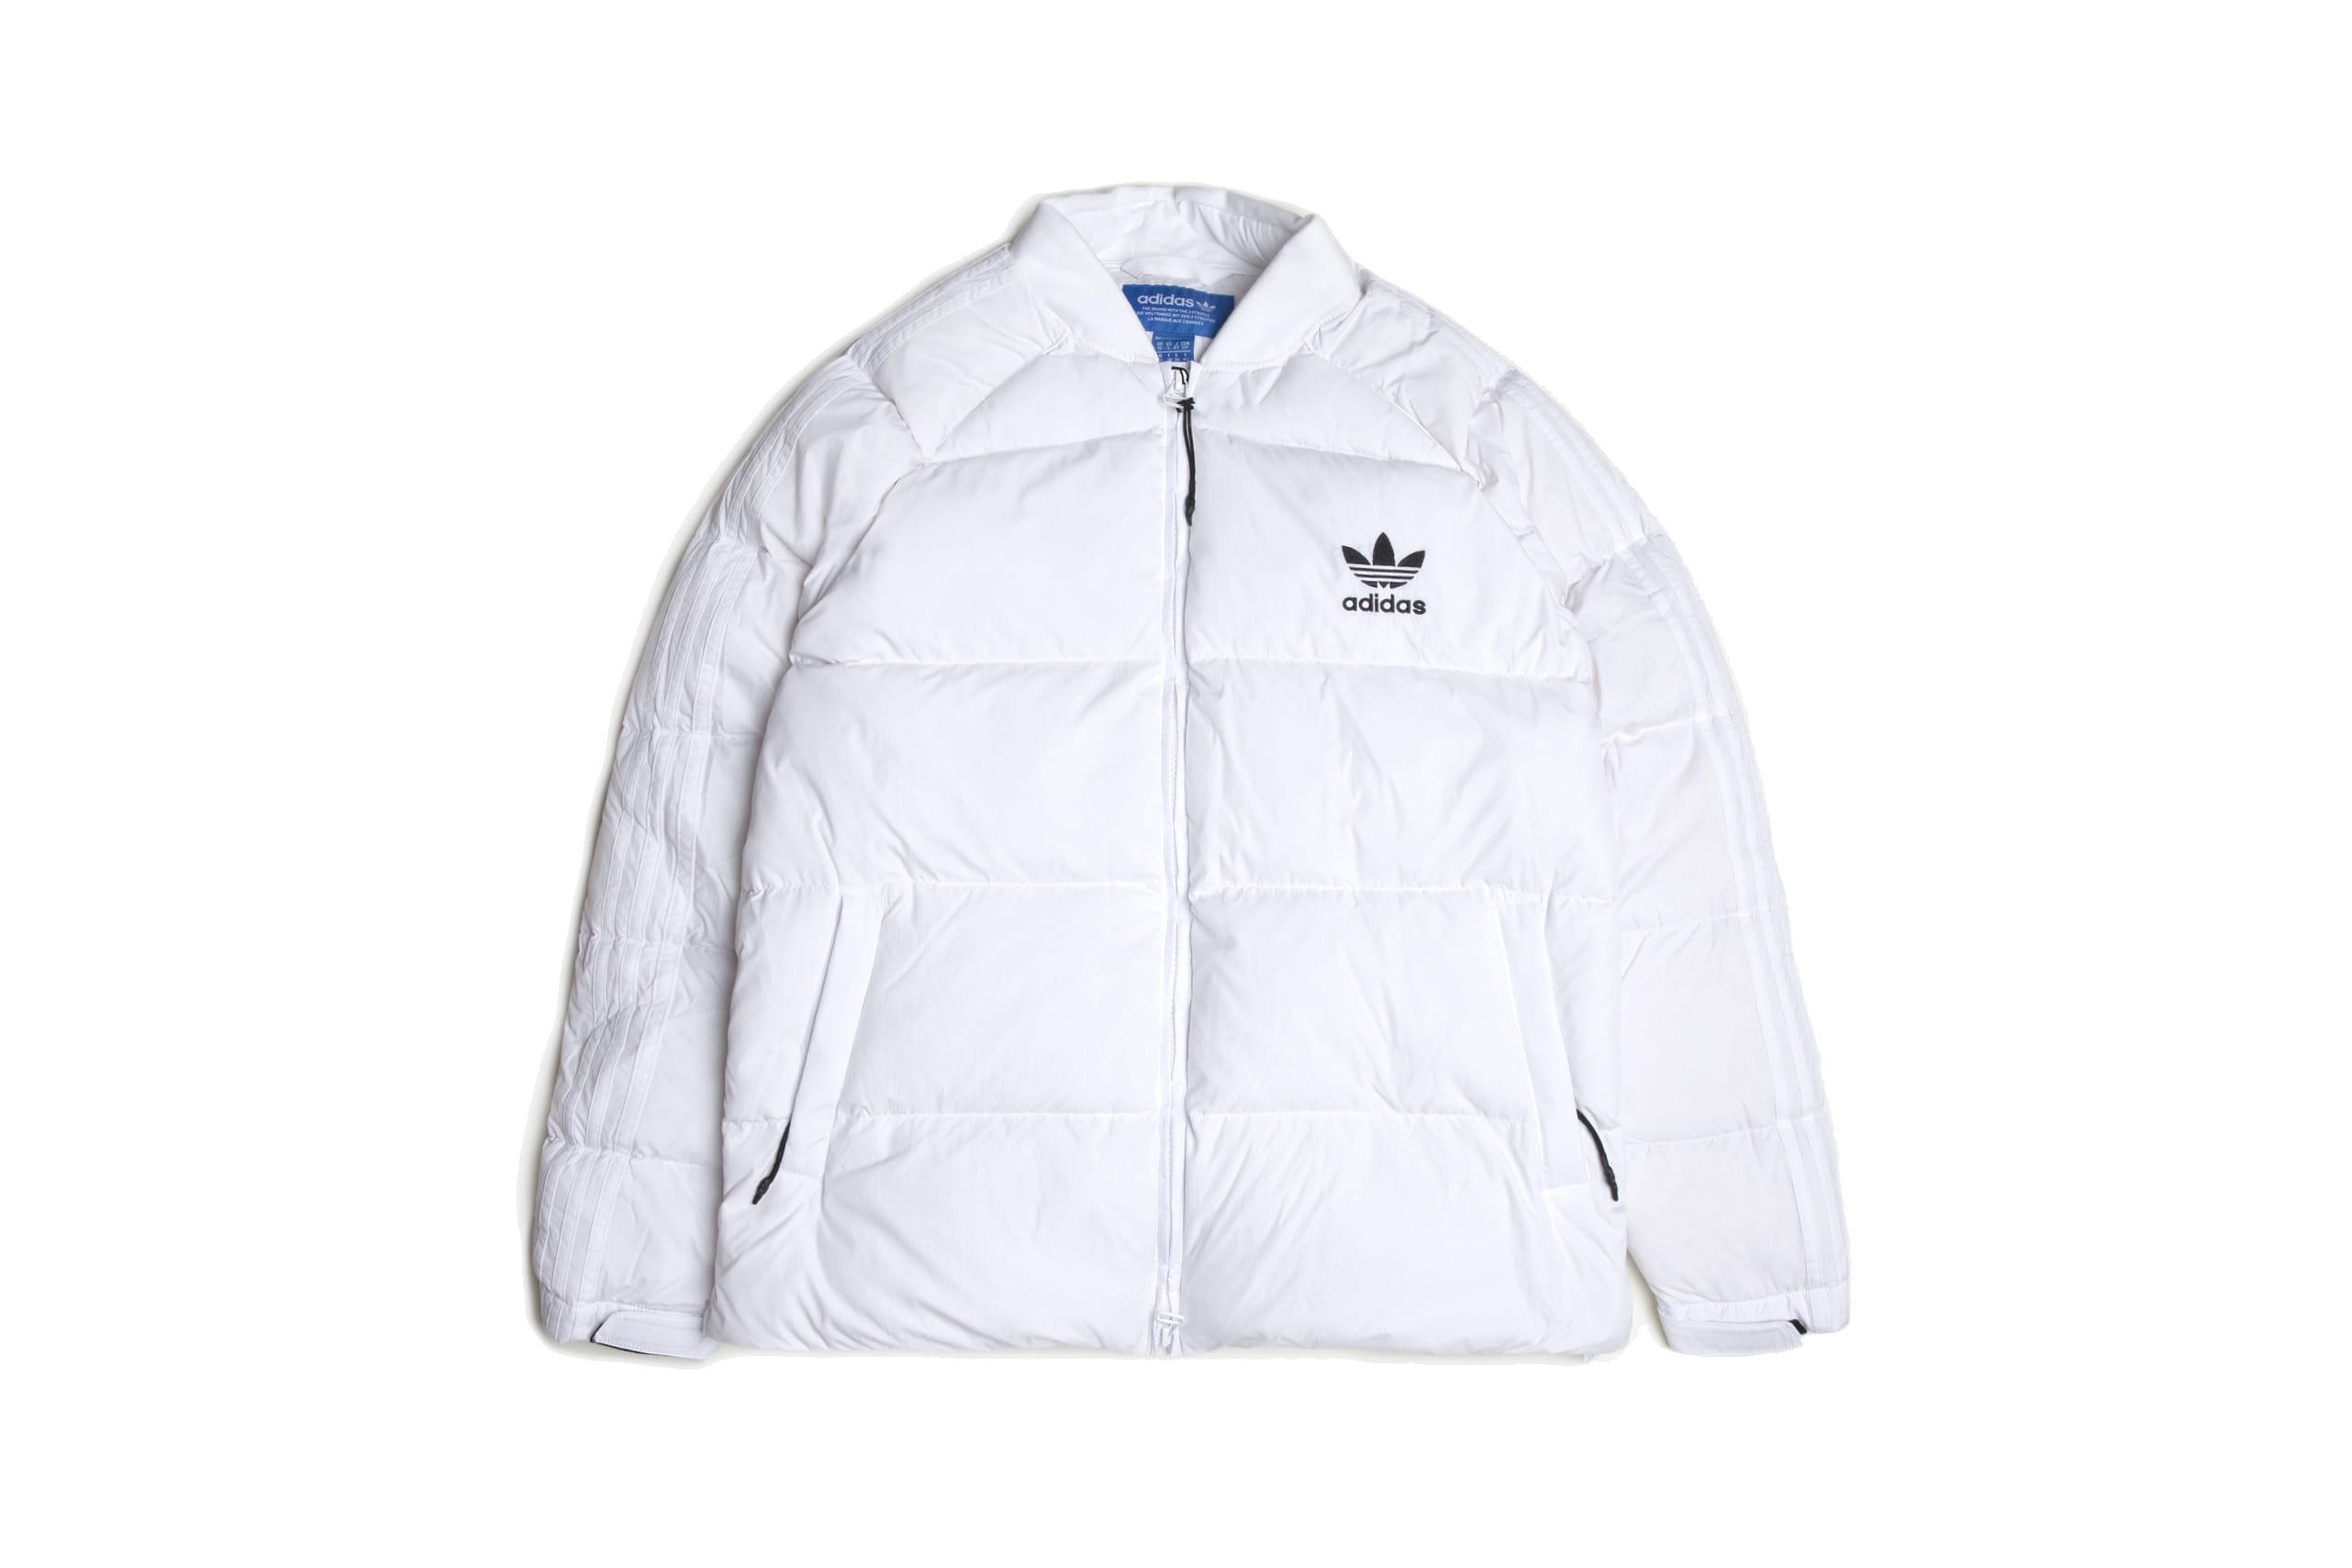 adidas white puffer jacket